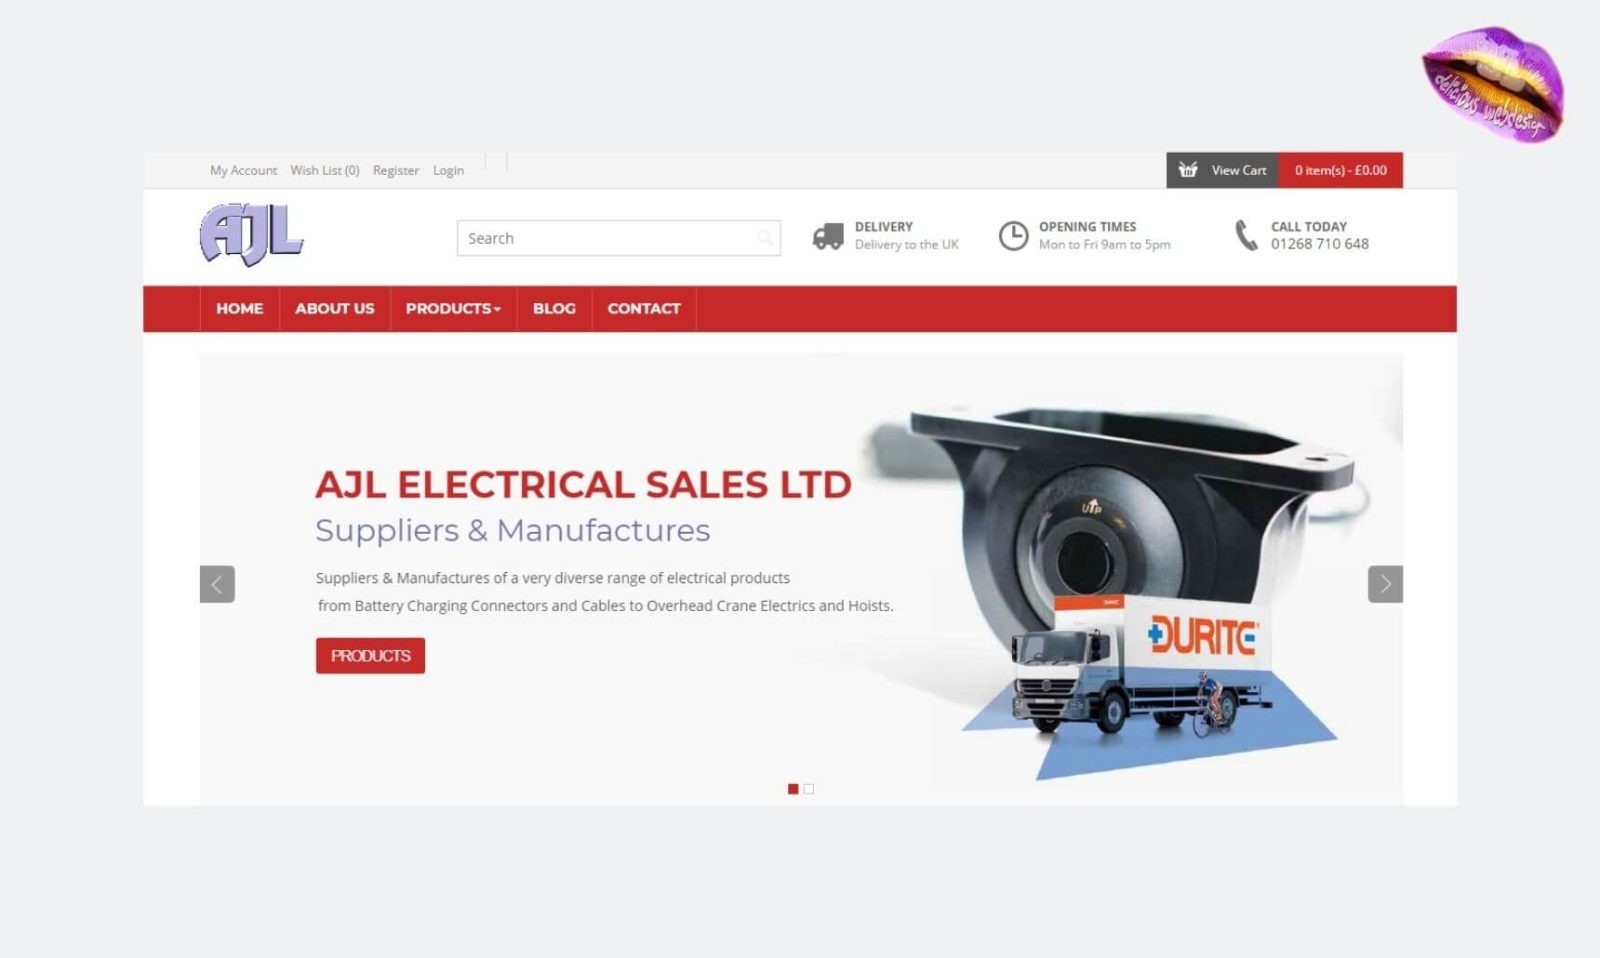 AJL Electrical Sales Ltd